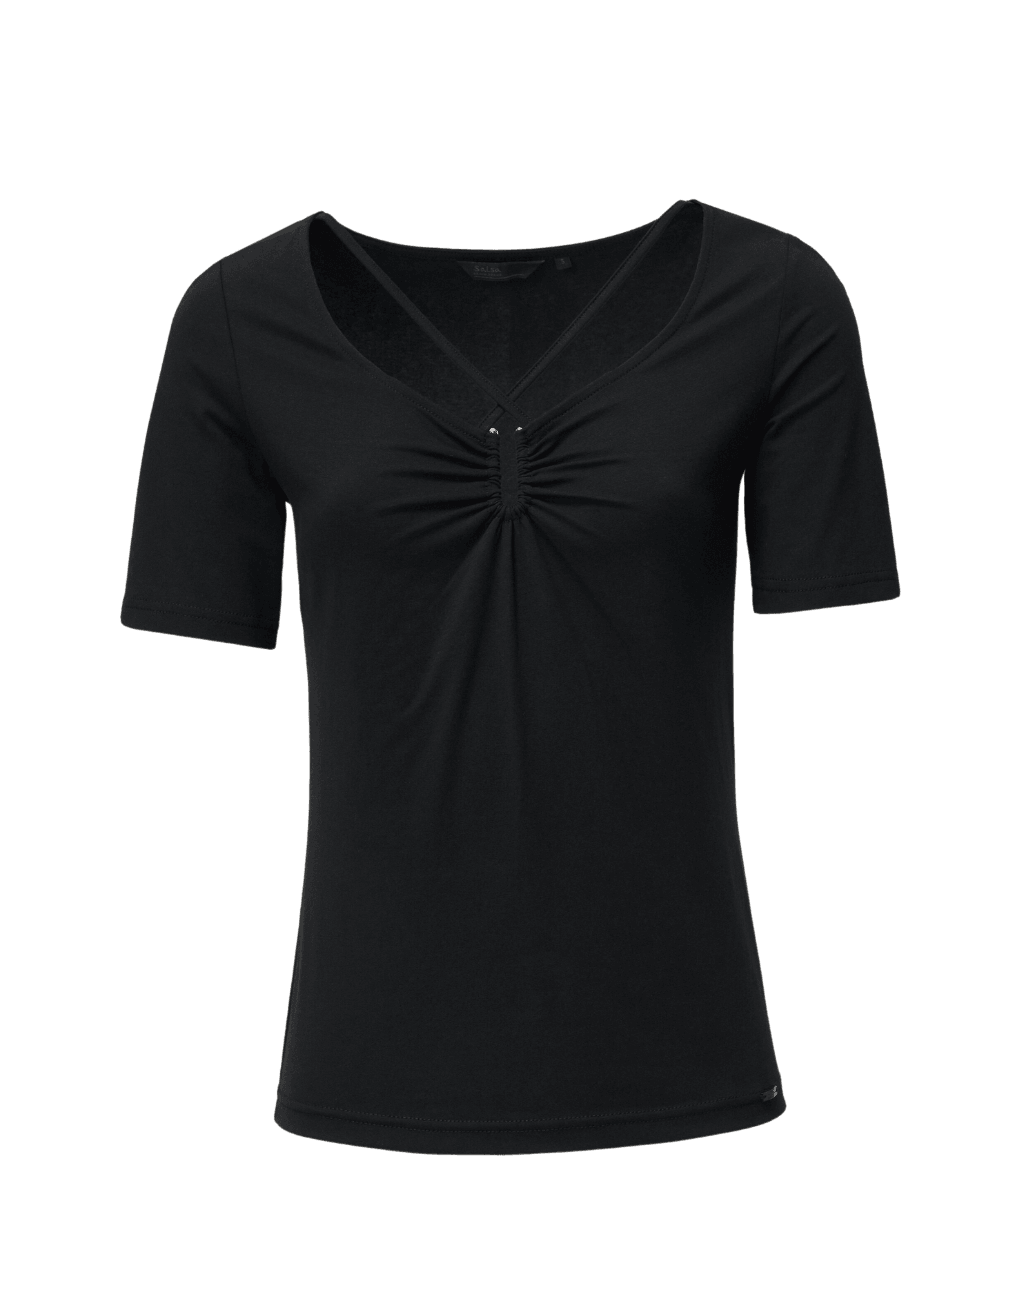 Camiseta Salsa Jeans de Mujer con Escote Asimétrico - ECRU